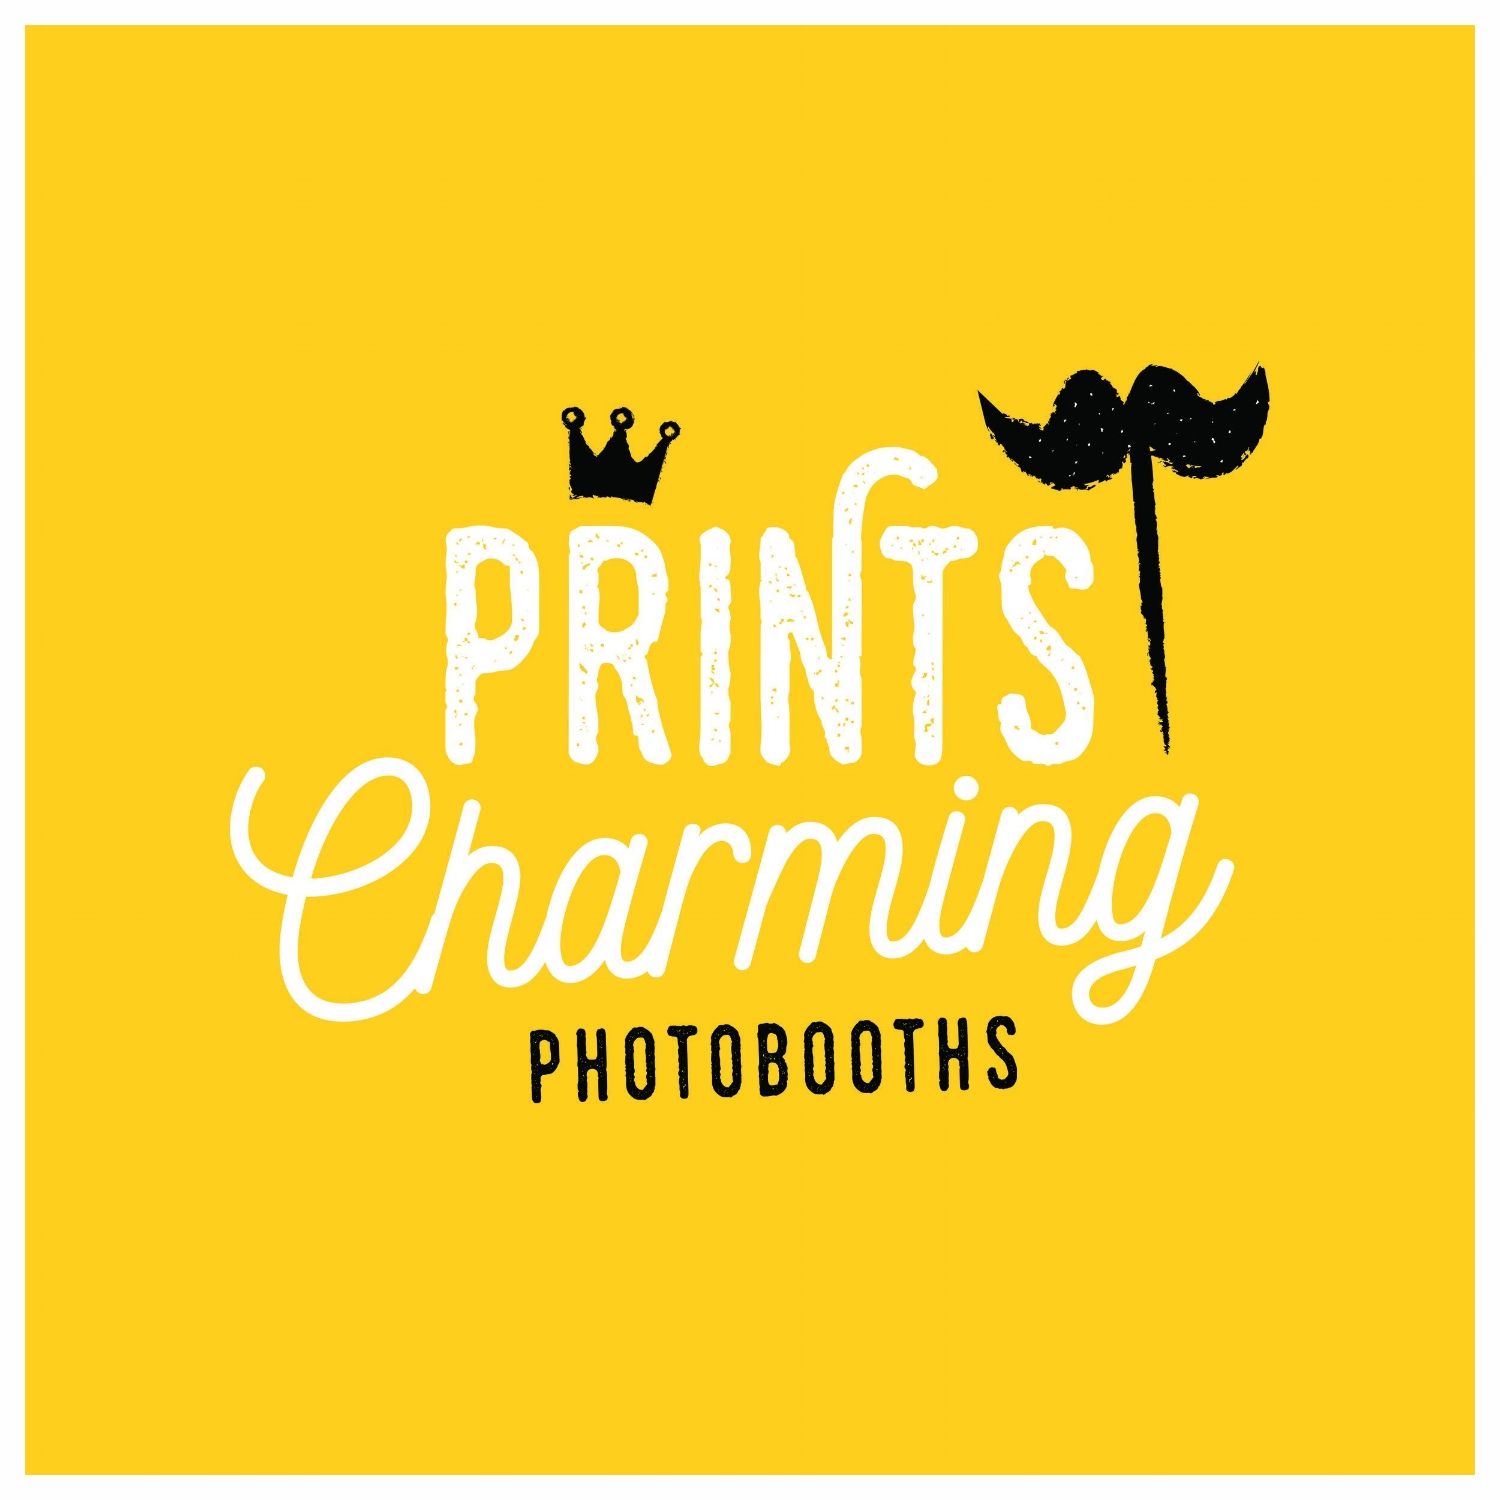 Prints Charming Photobooths